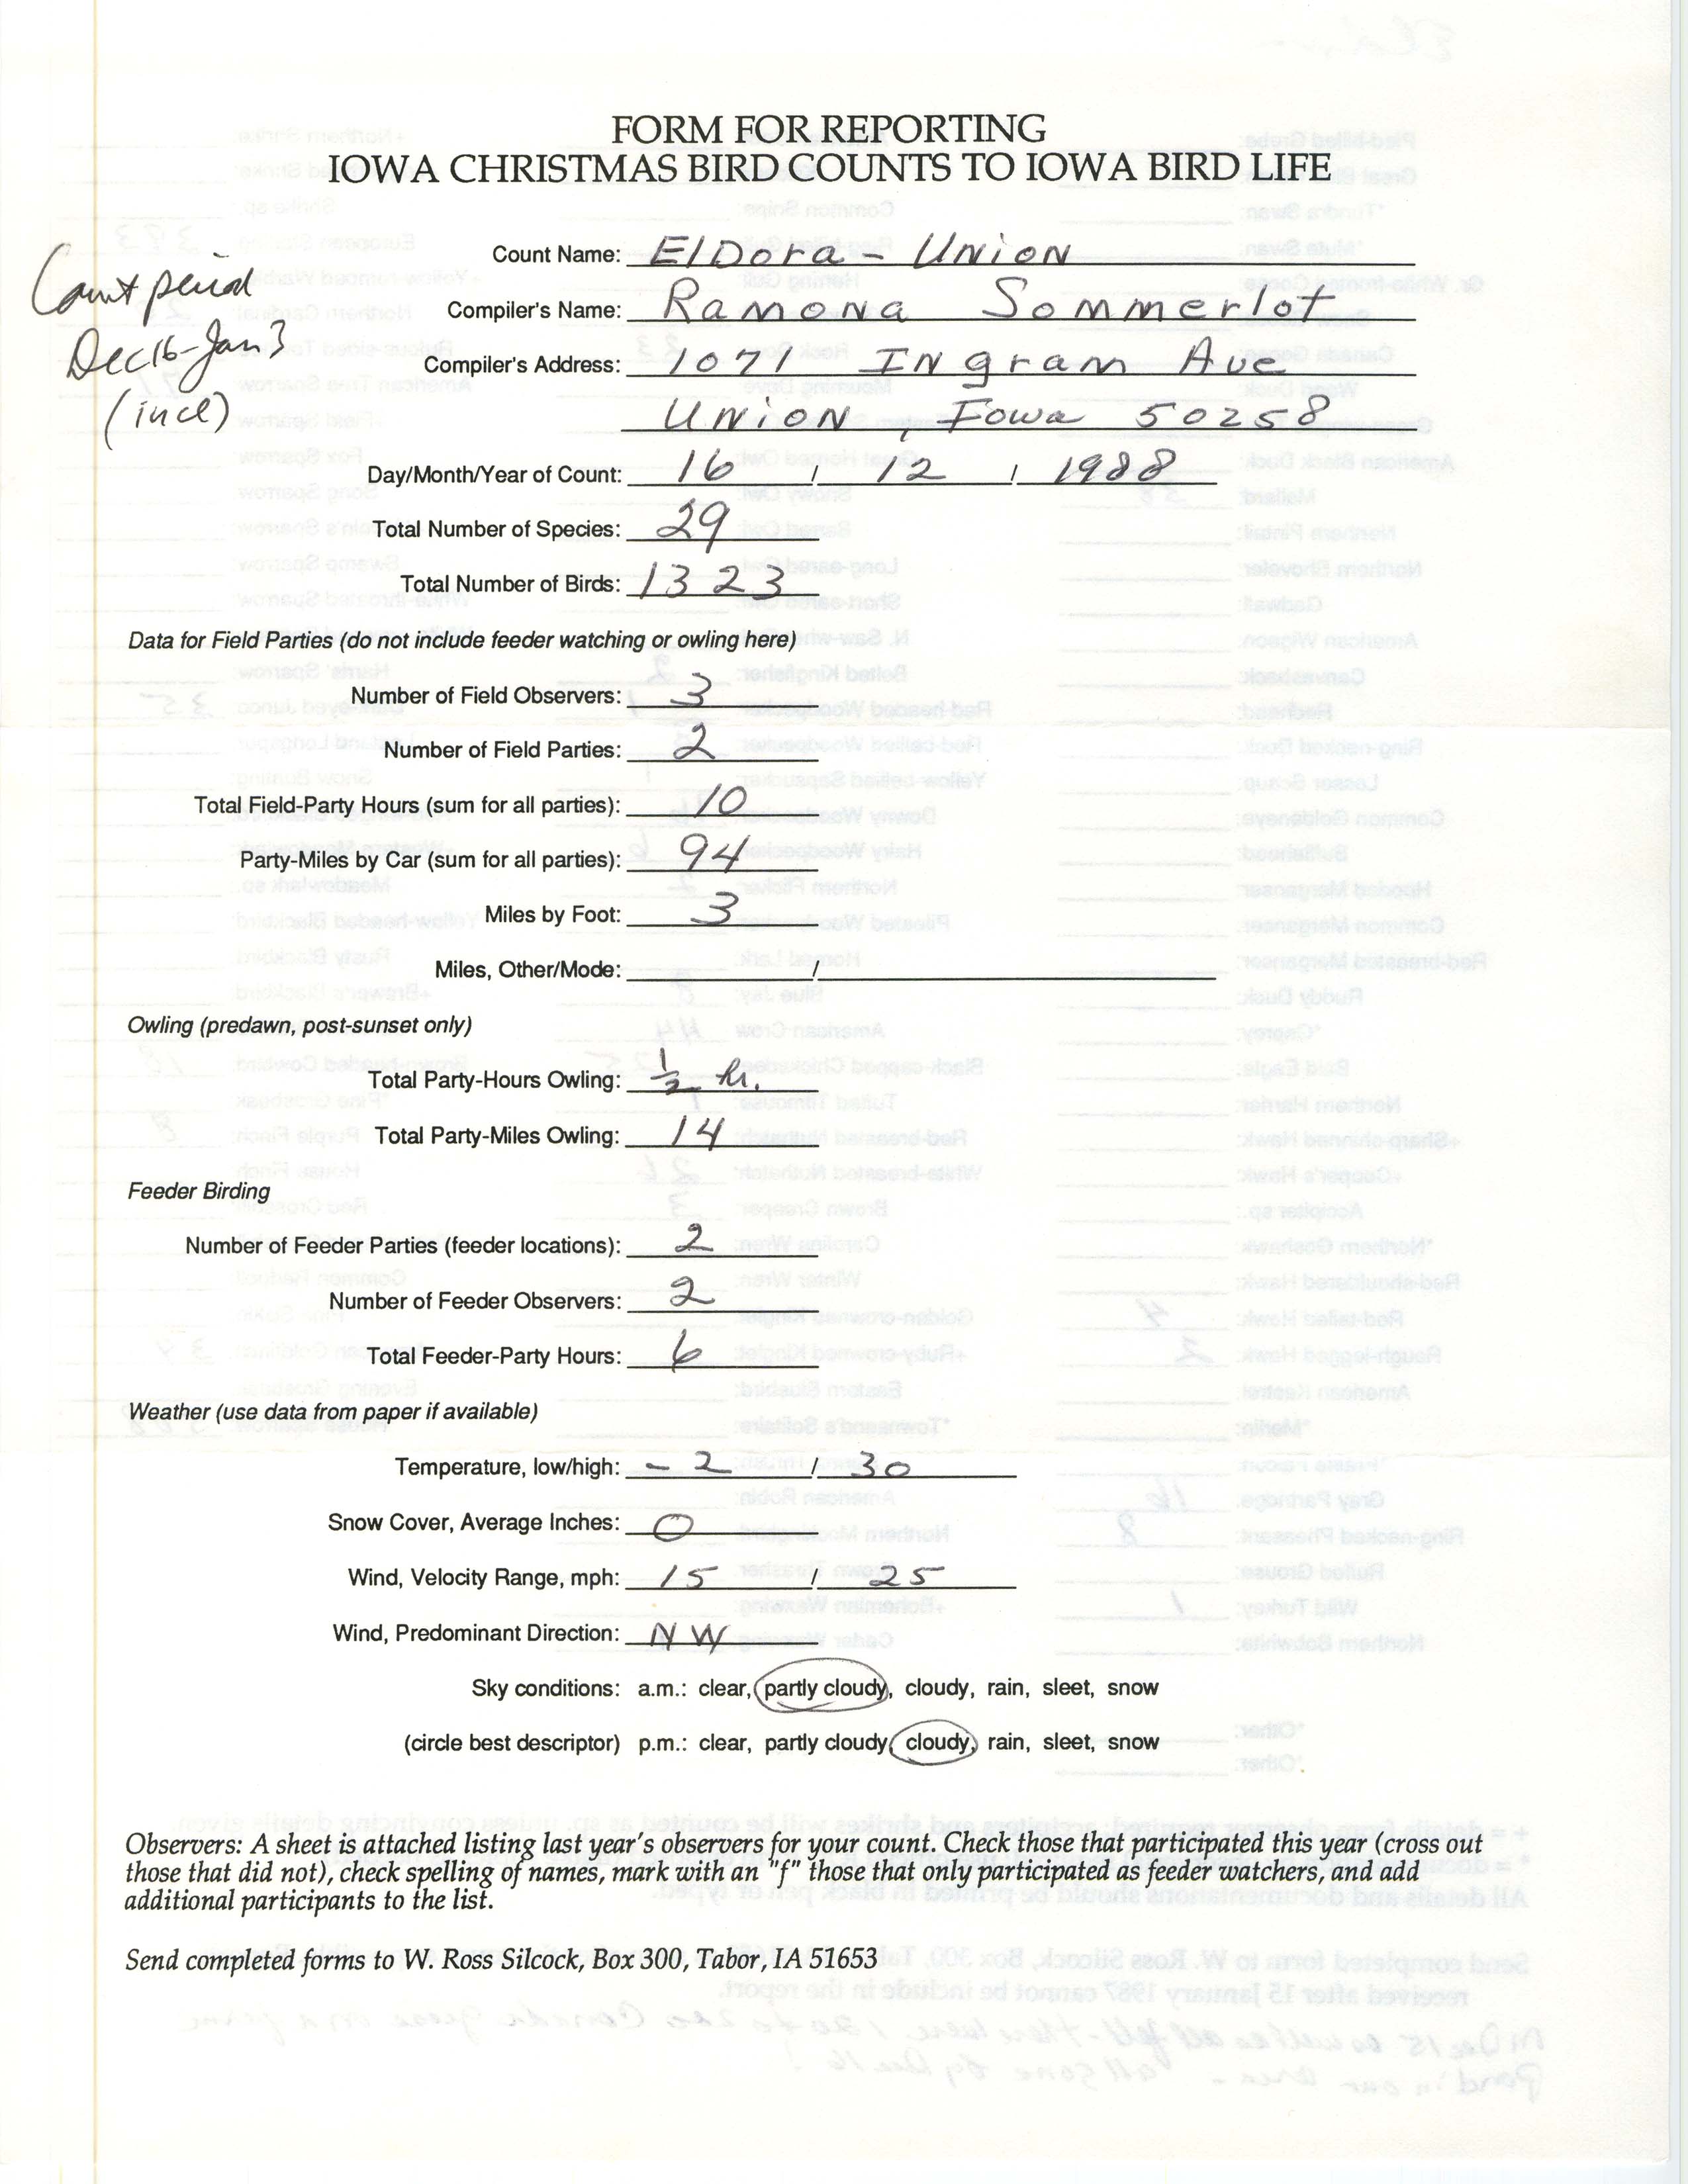 Form for reporting Iowa Christmas bird counts to Iowa Bird Life, Ramona R. Sommerlot, December 16, 1988